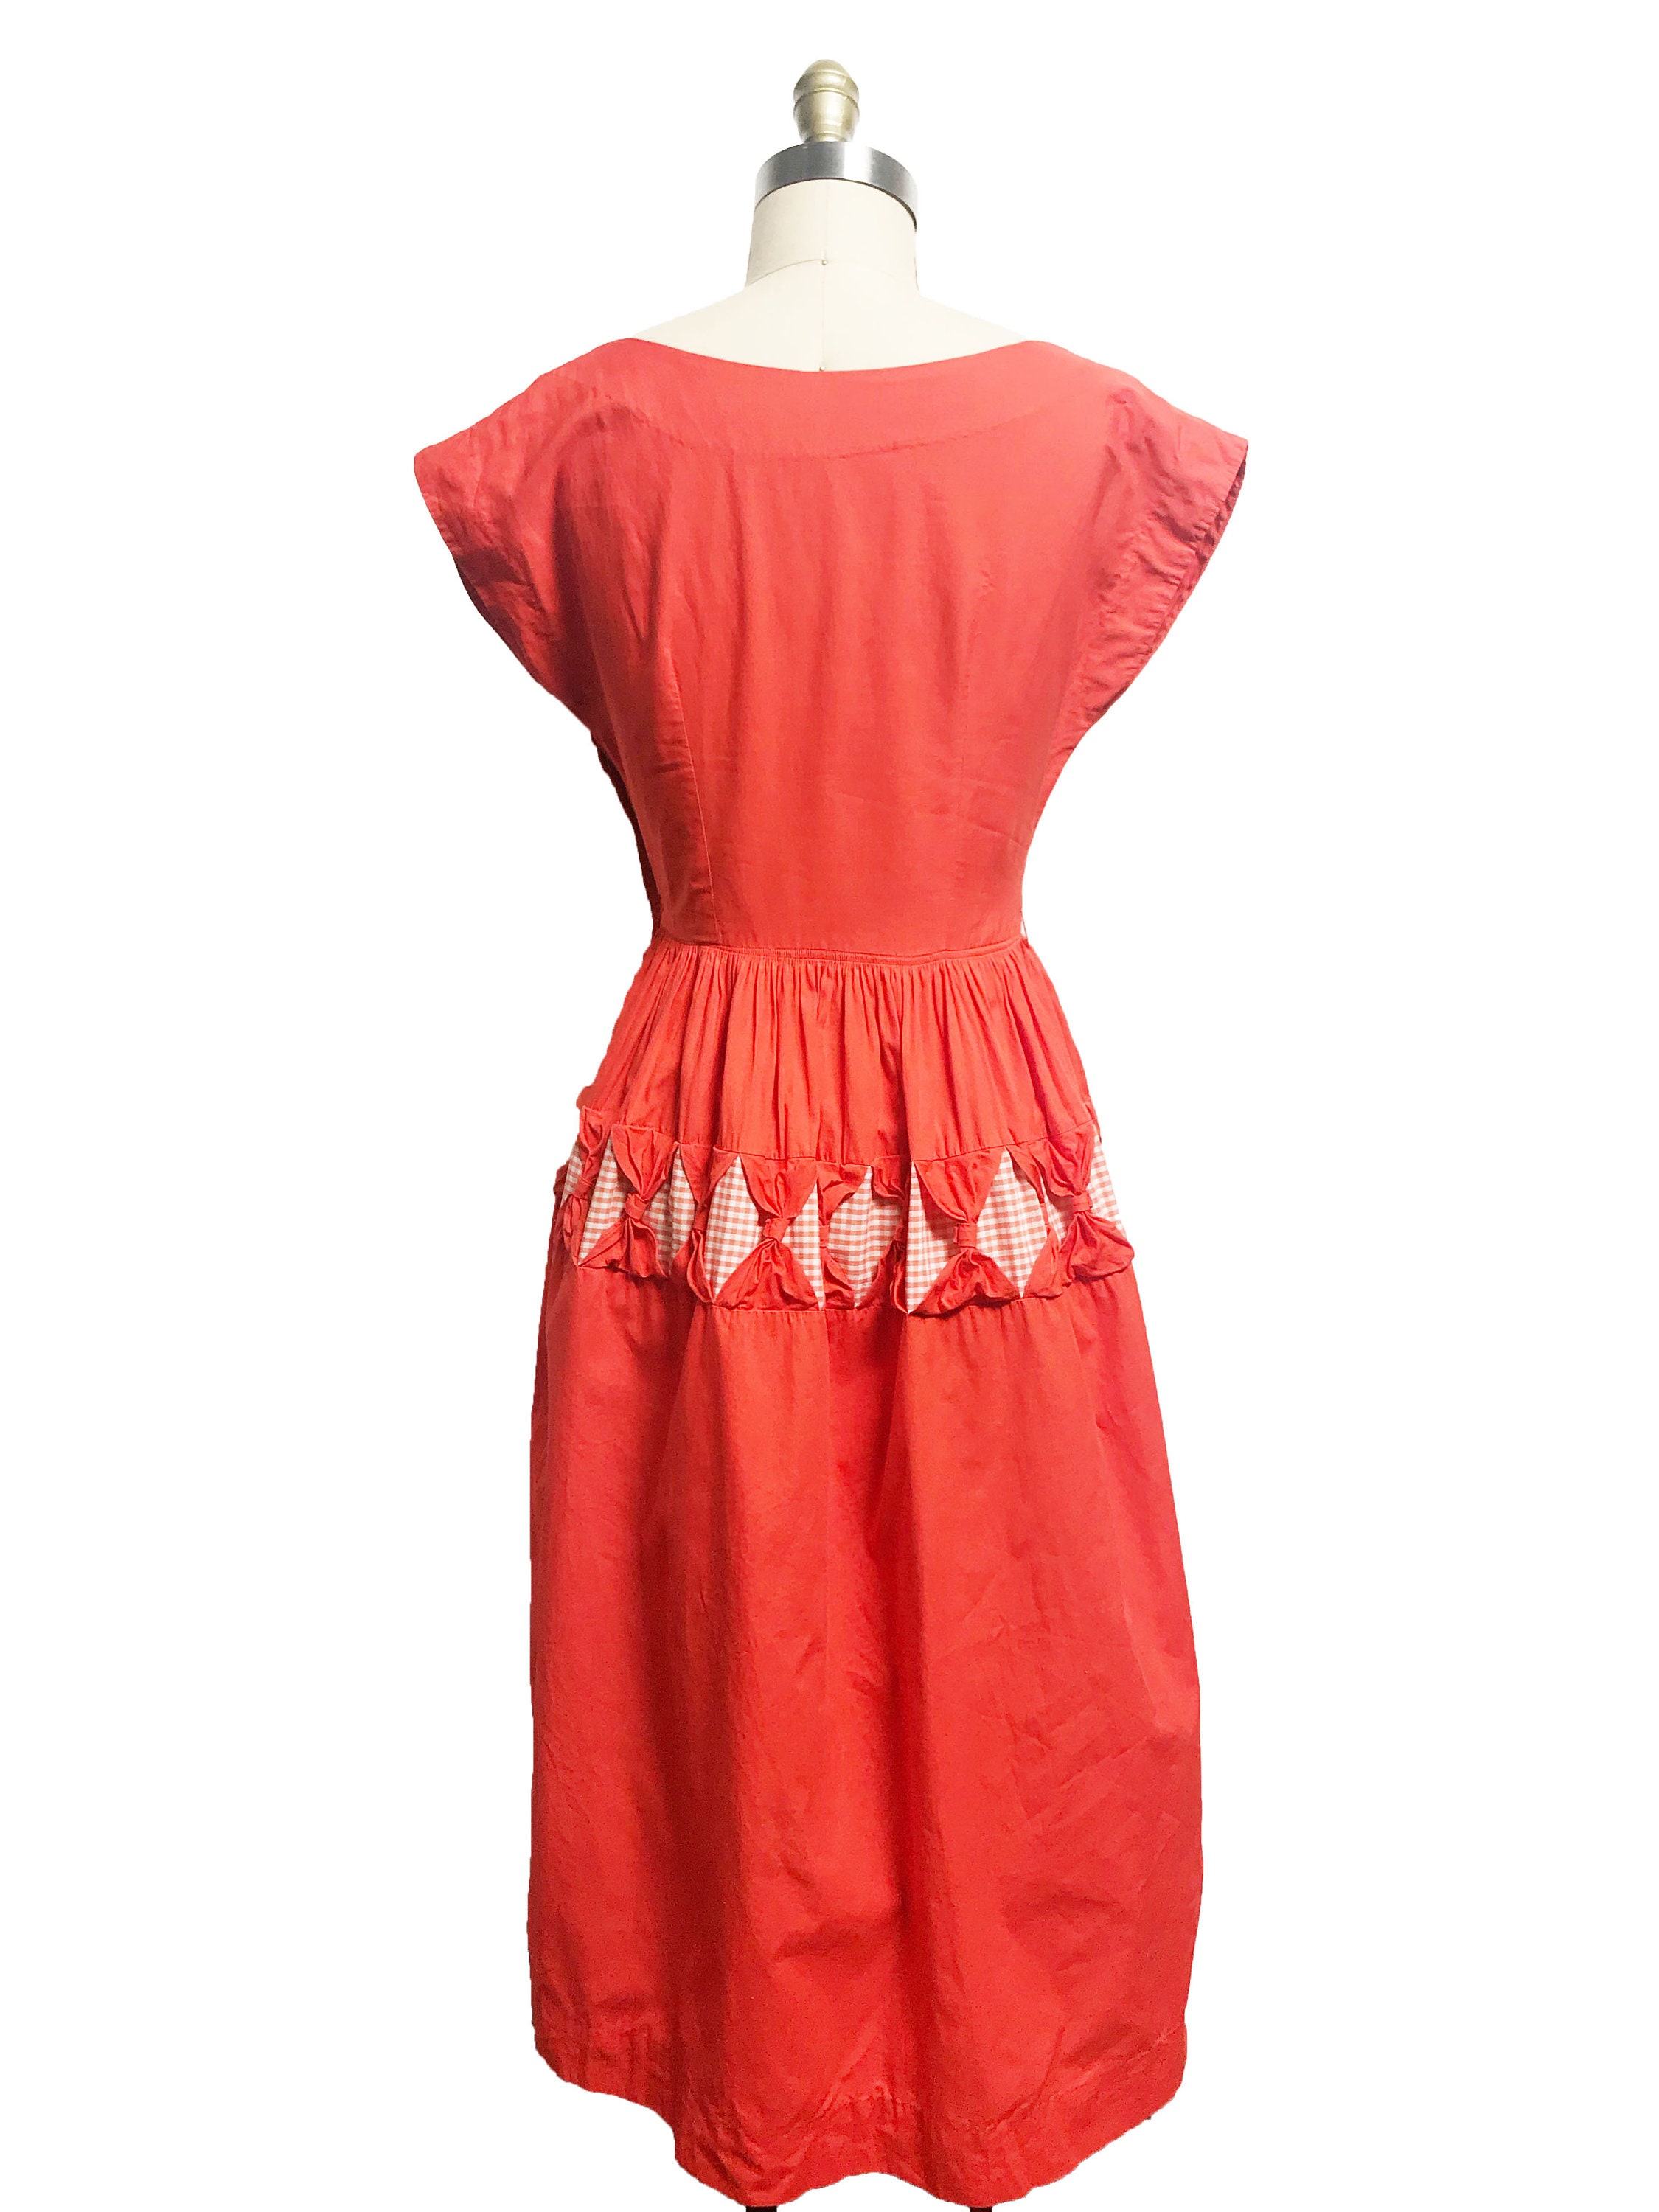 Vintage 1950s Orange Dress Bow Detail Gingham Print Cotton | Etsy